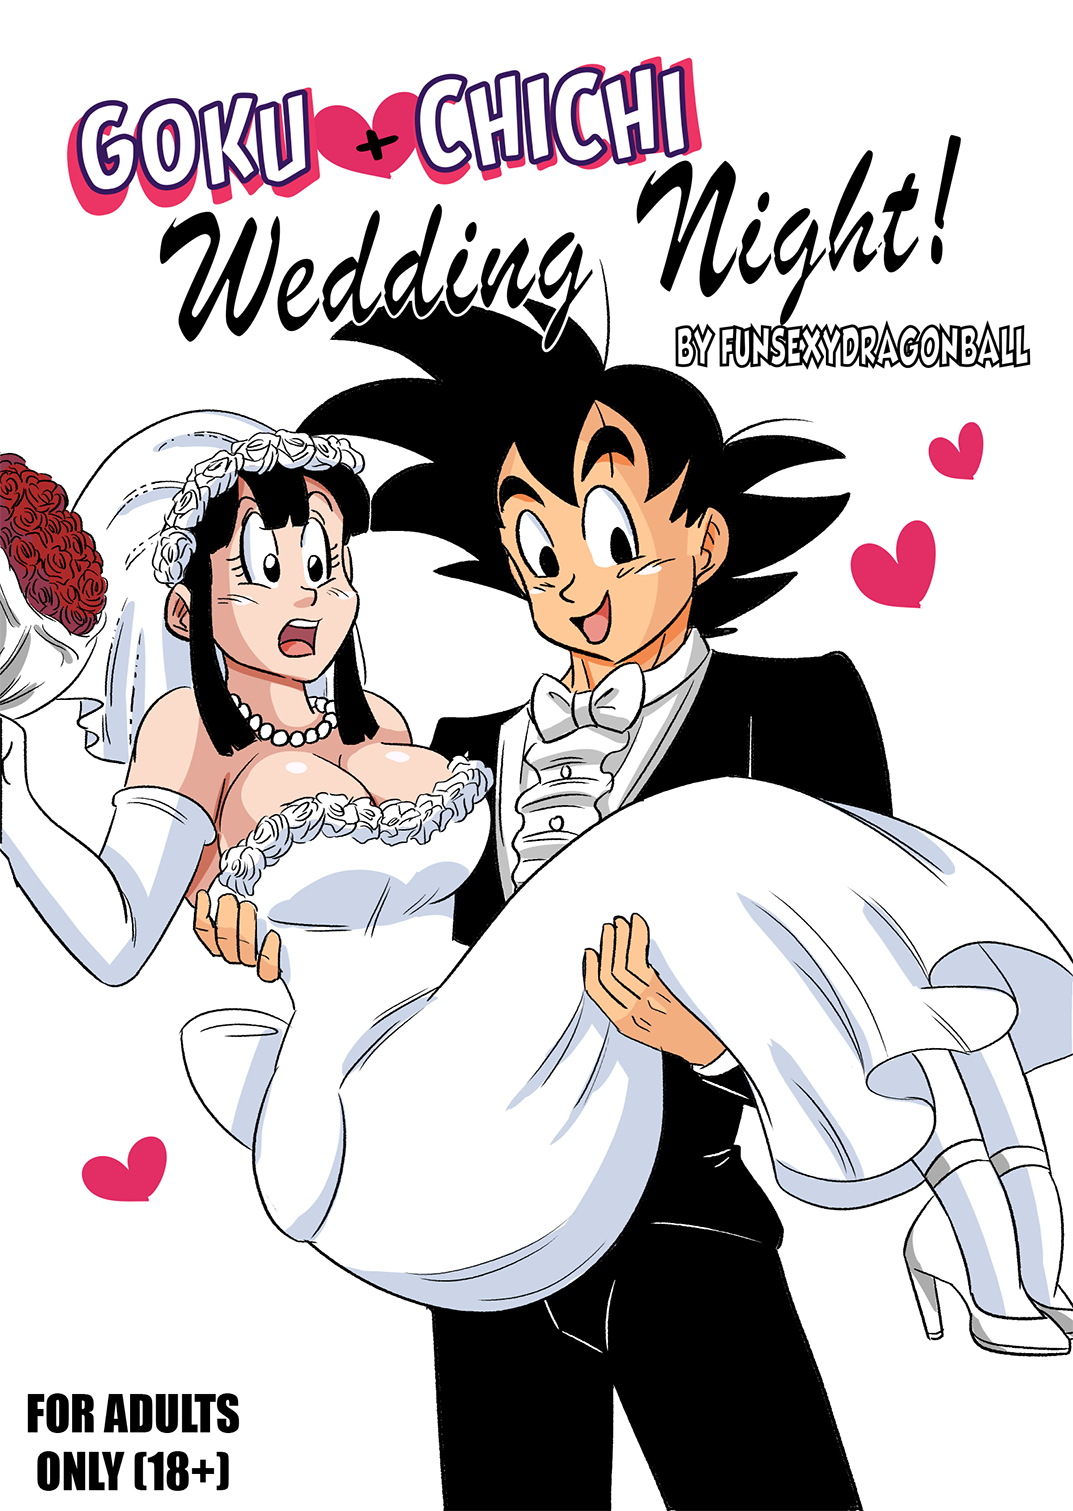 Funsexydragonball Wedding Night Dragon Ball Ongoing Porn Comic